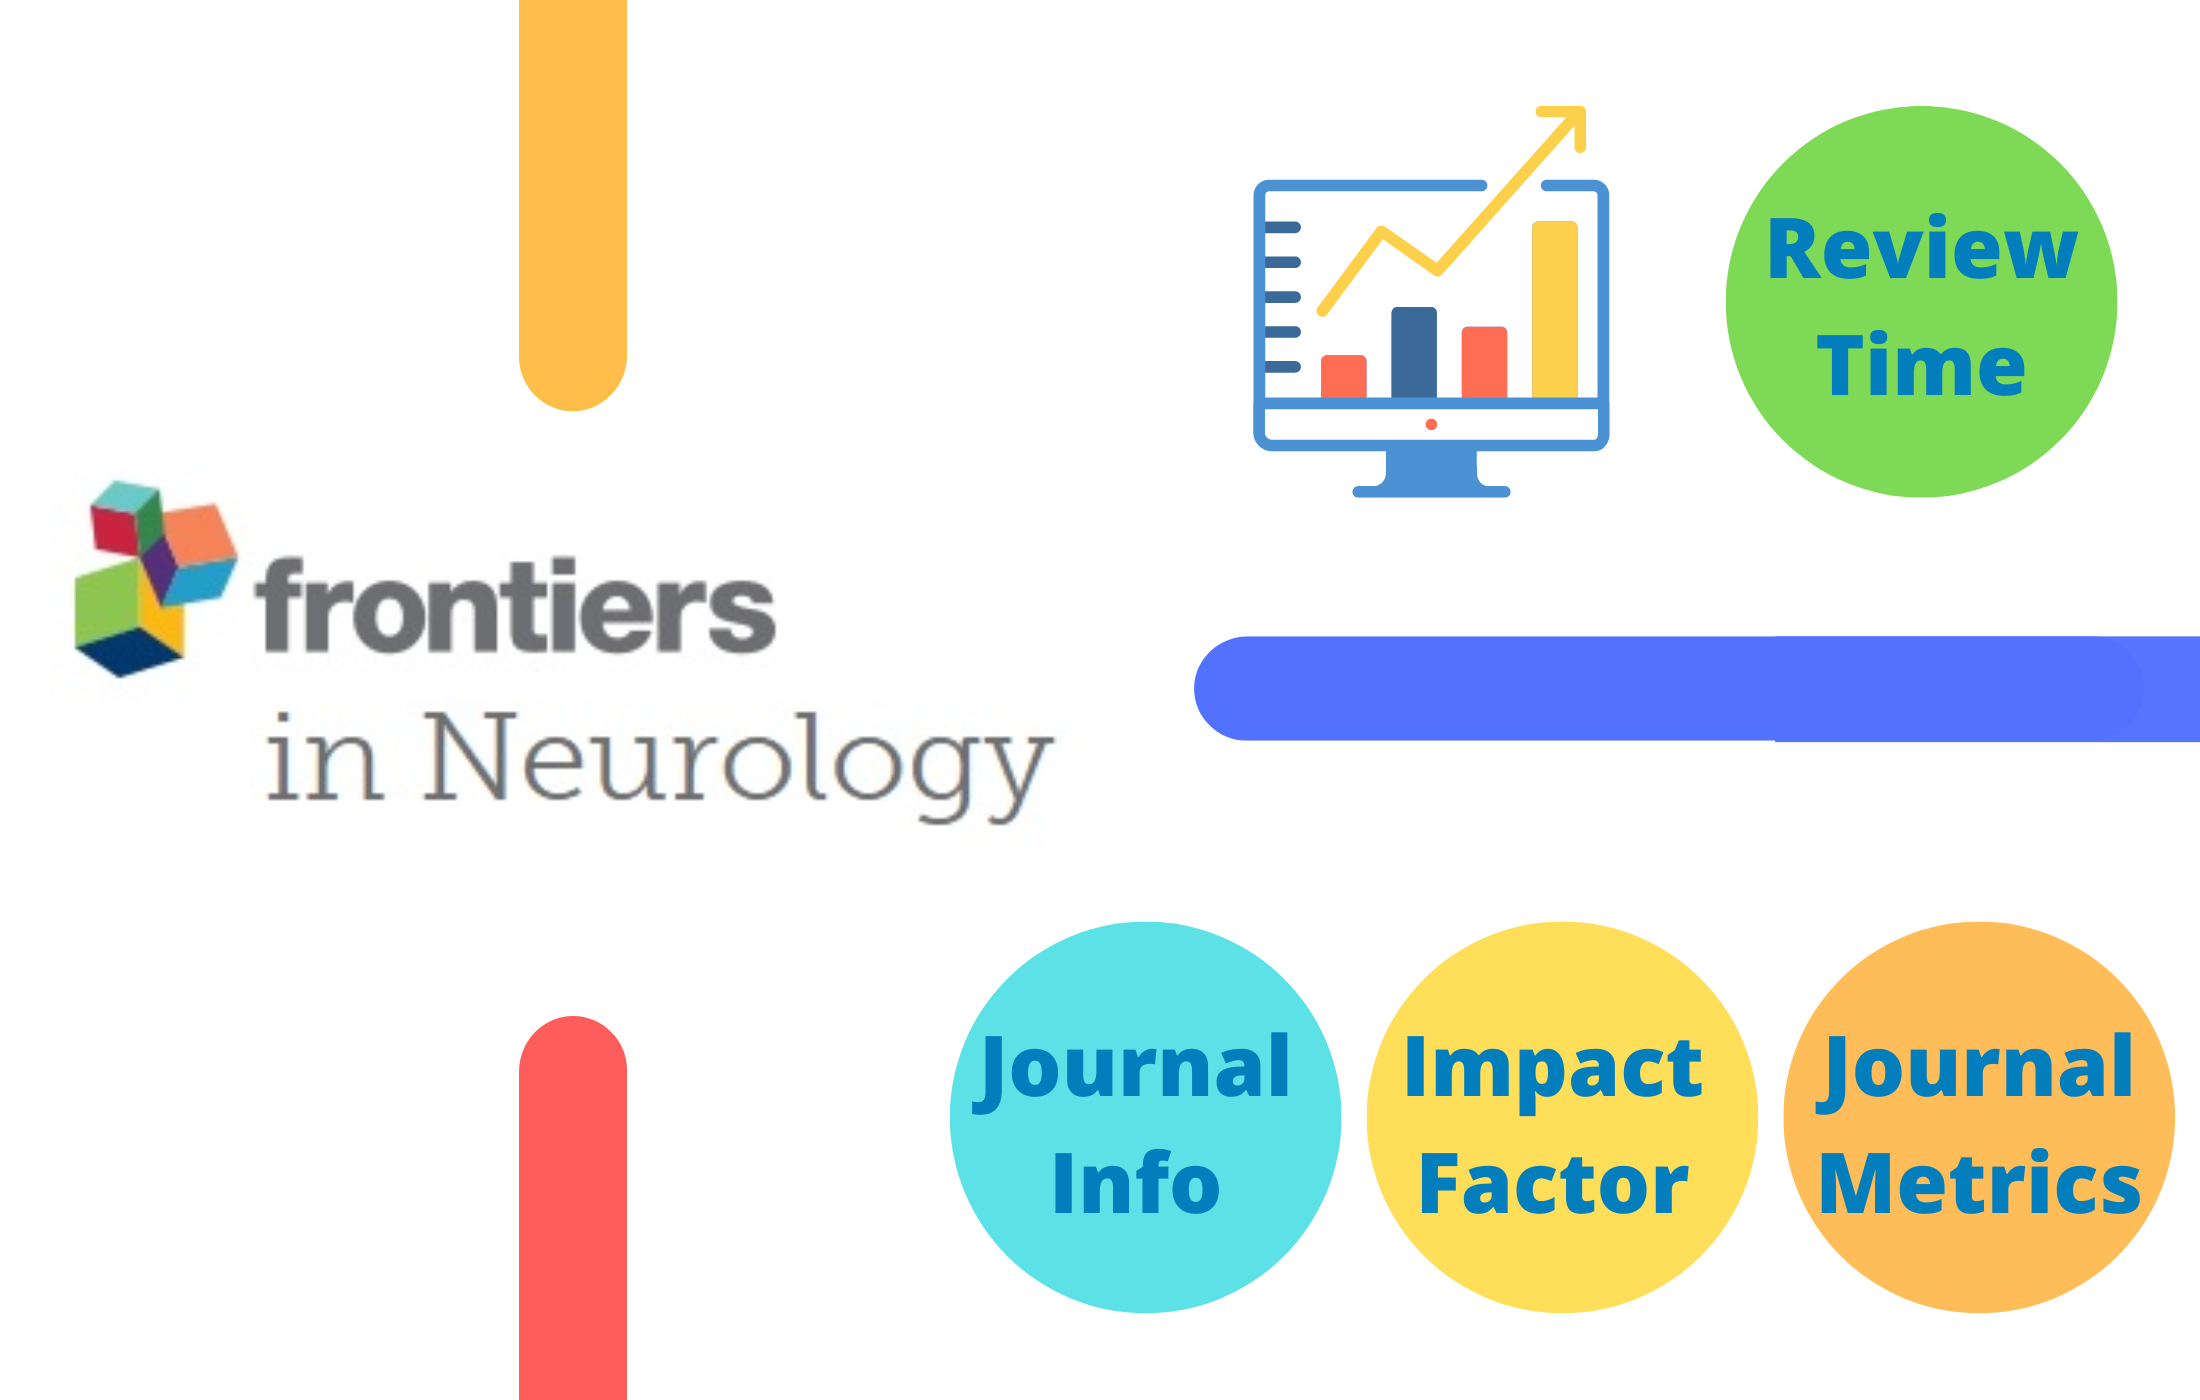 Frontiers in Neurology Impact Factor